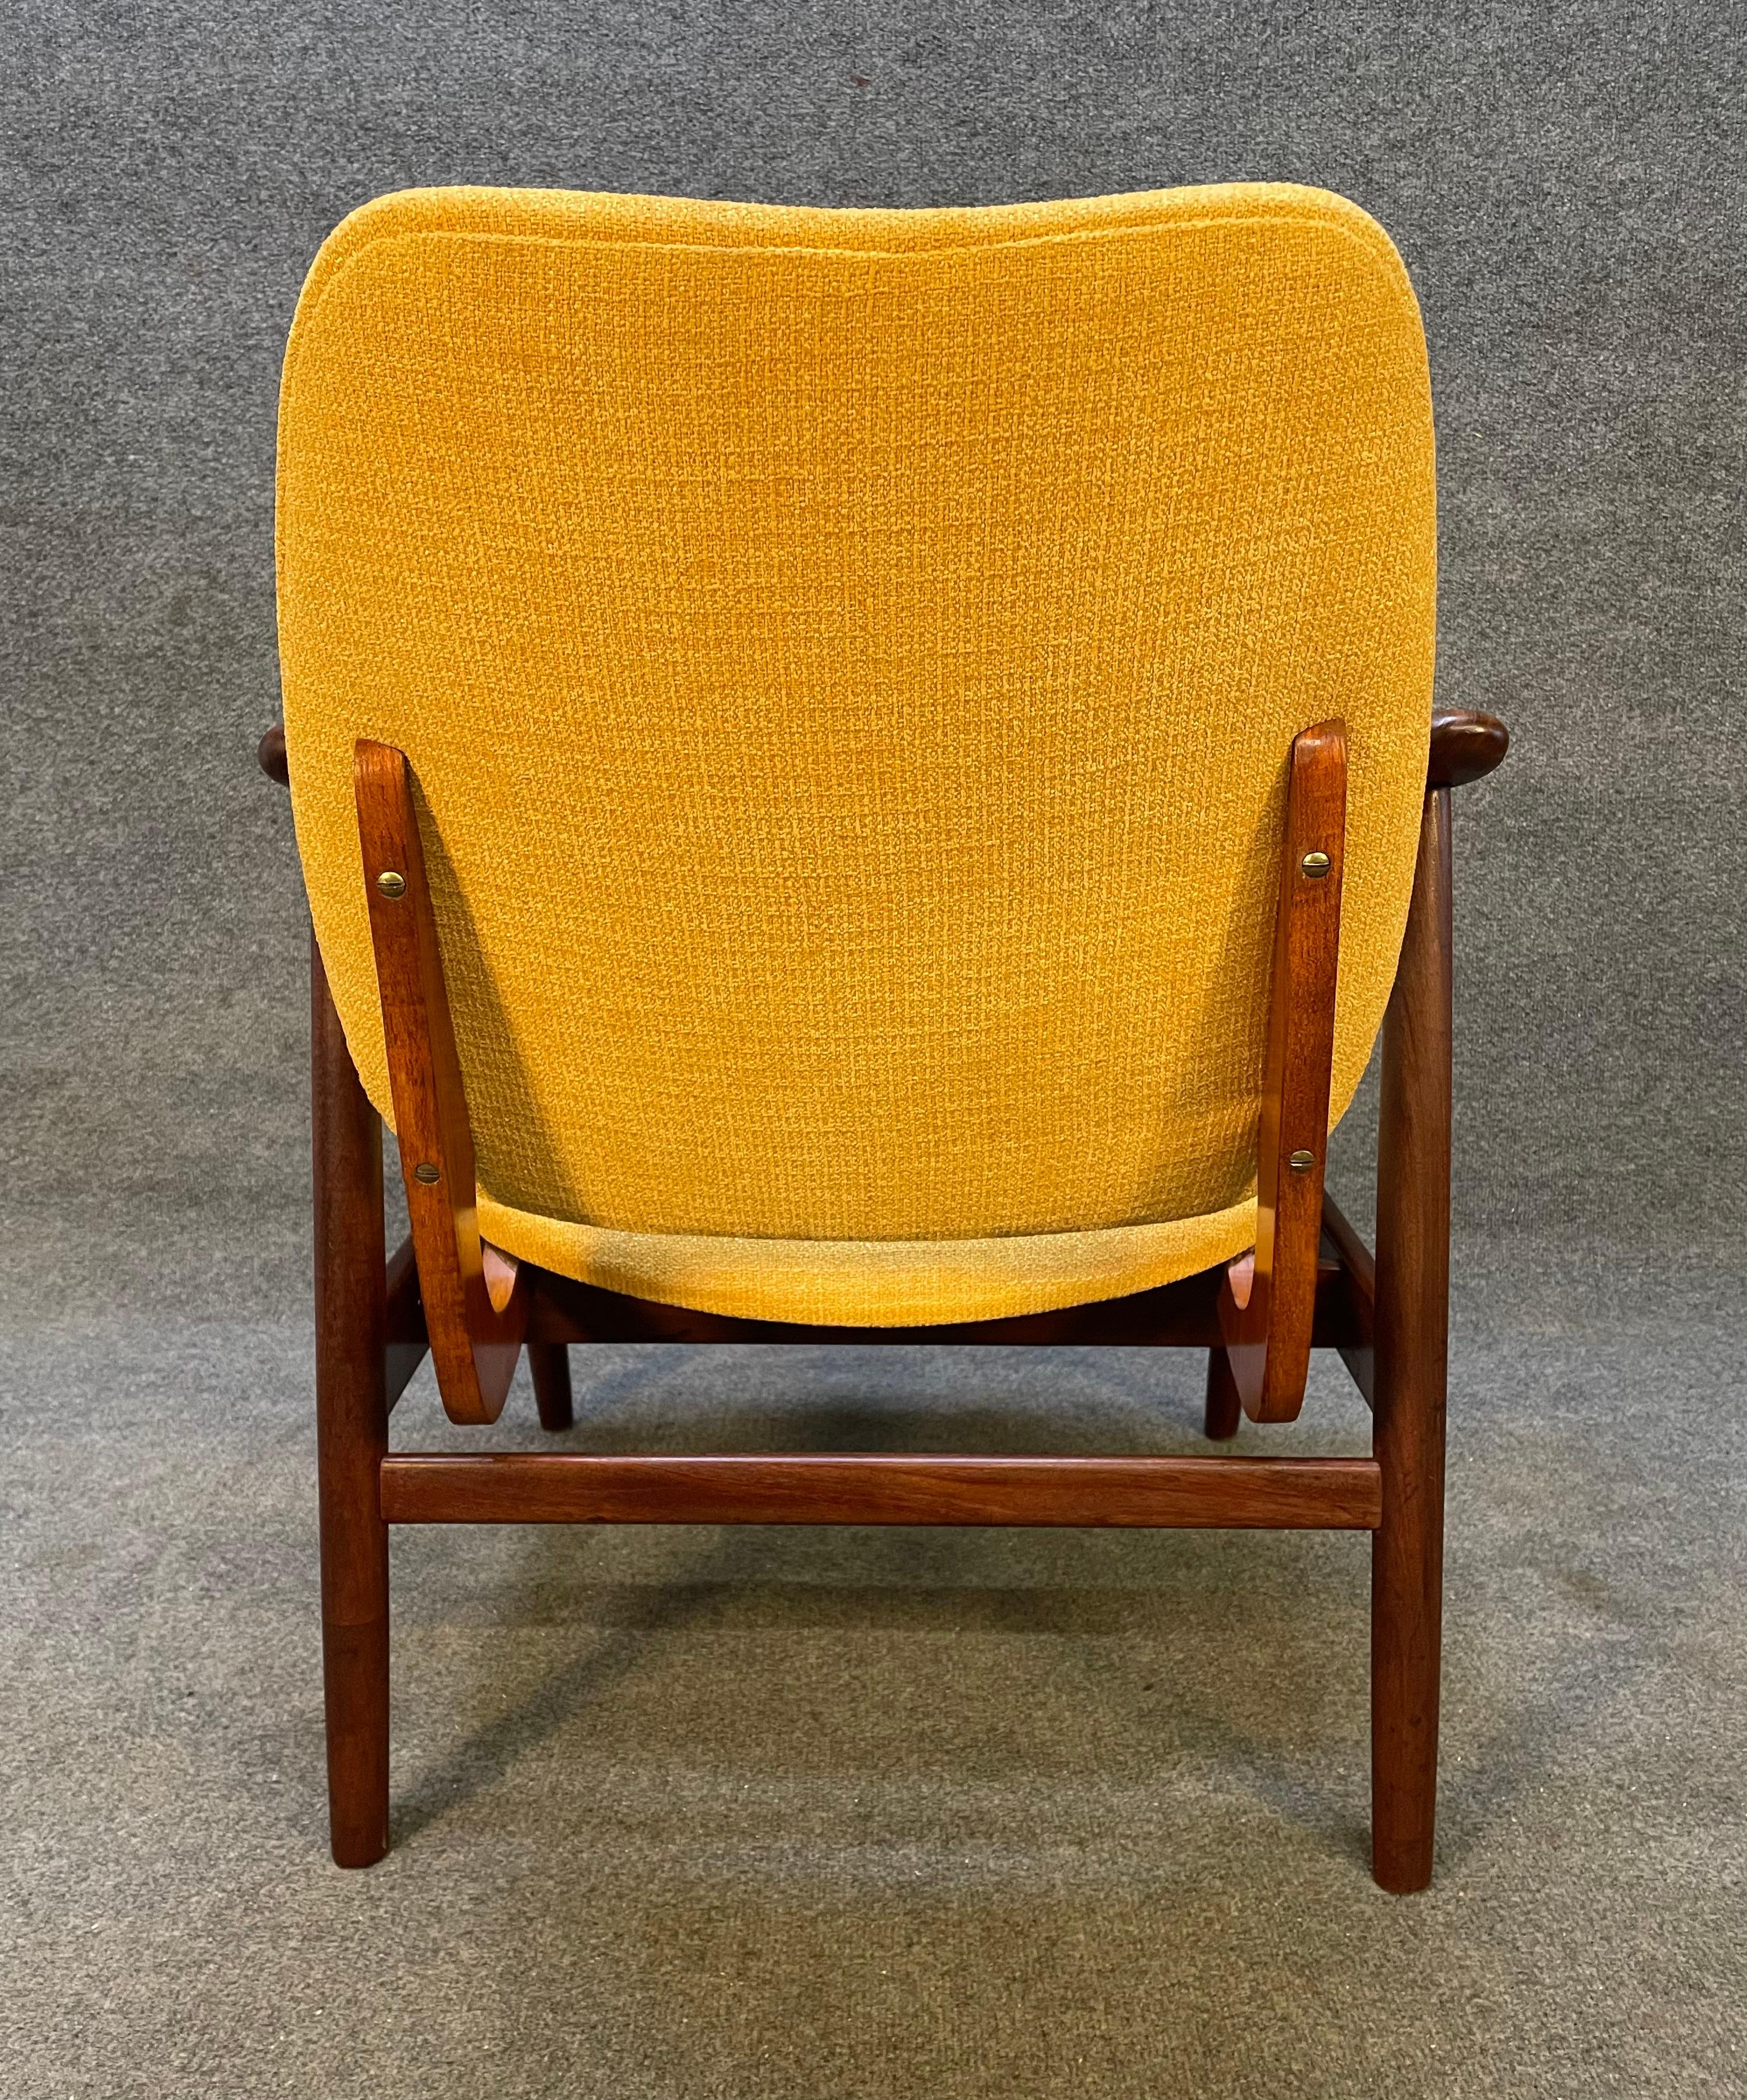 Mid-20th Century Vintage Danish Mid Century Modern Teak Lounge Chair For Sale